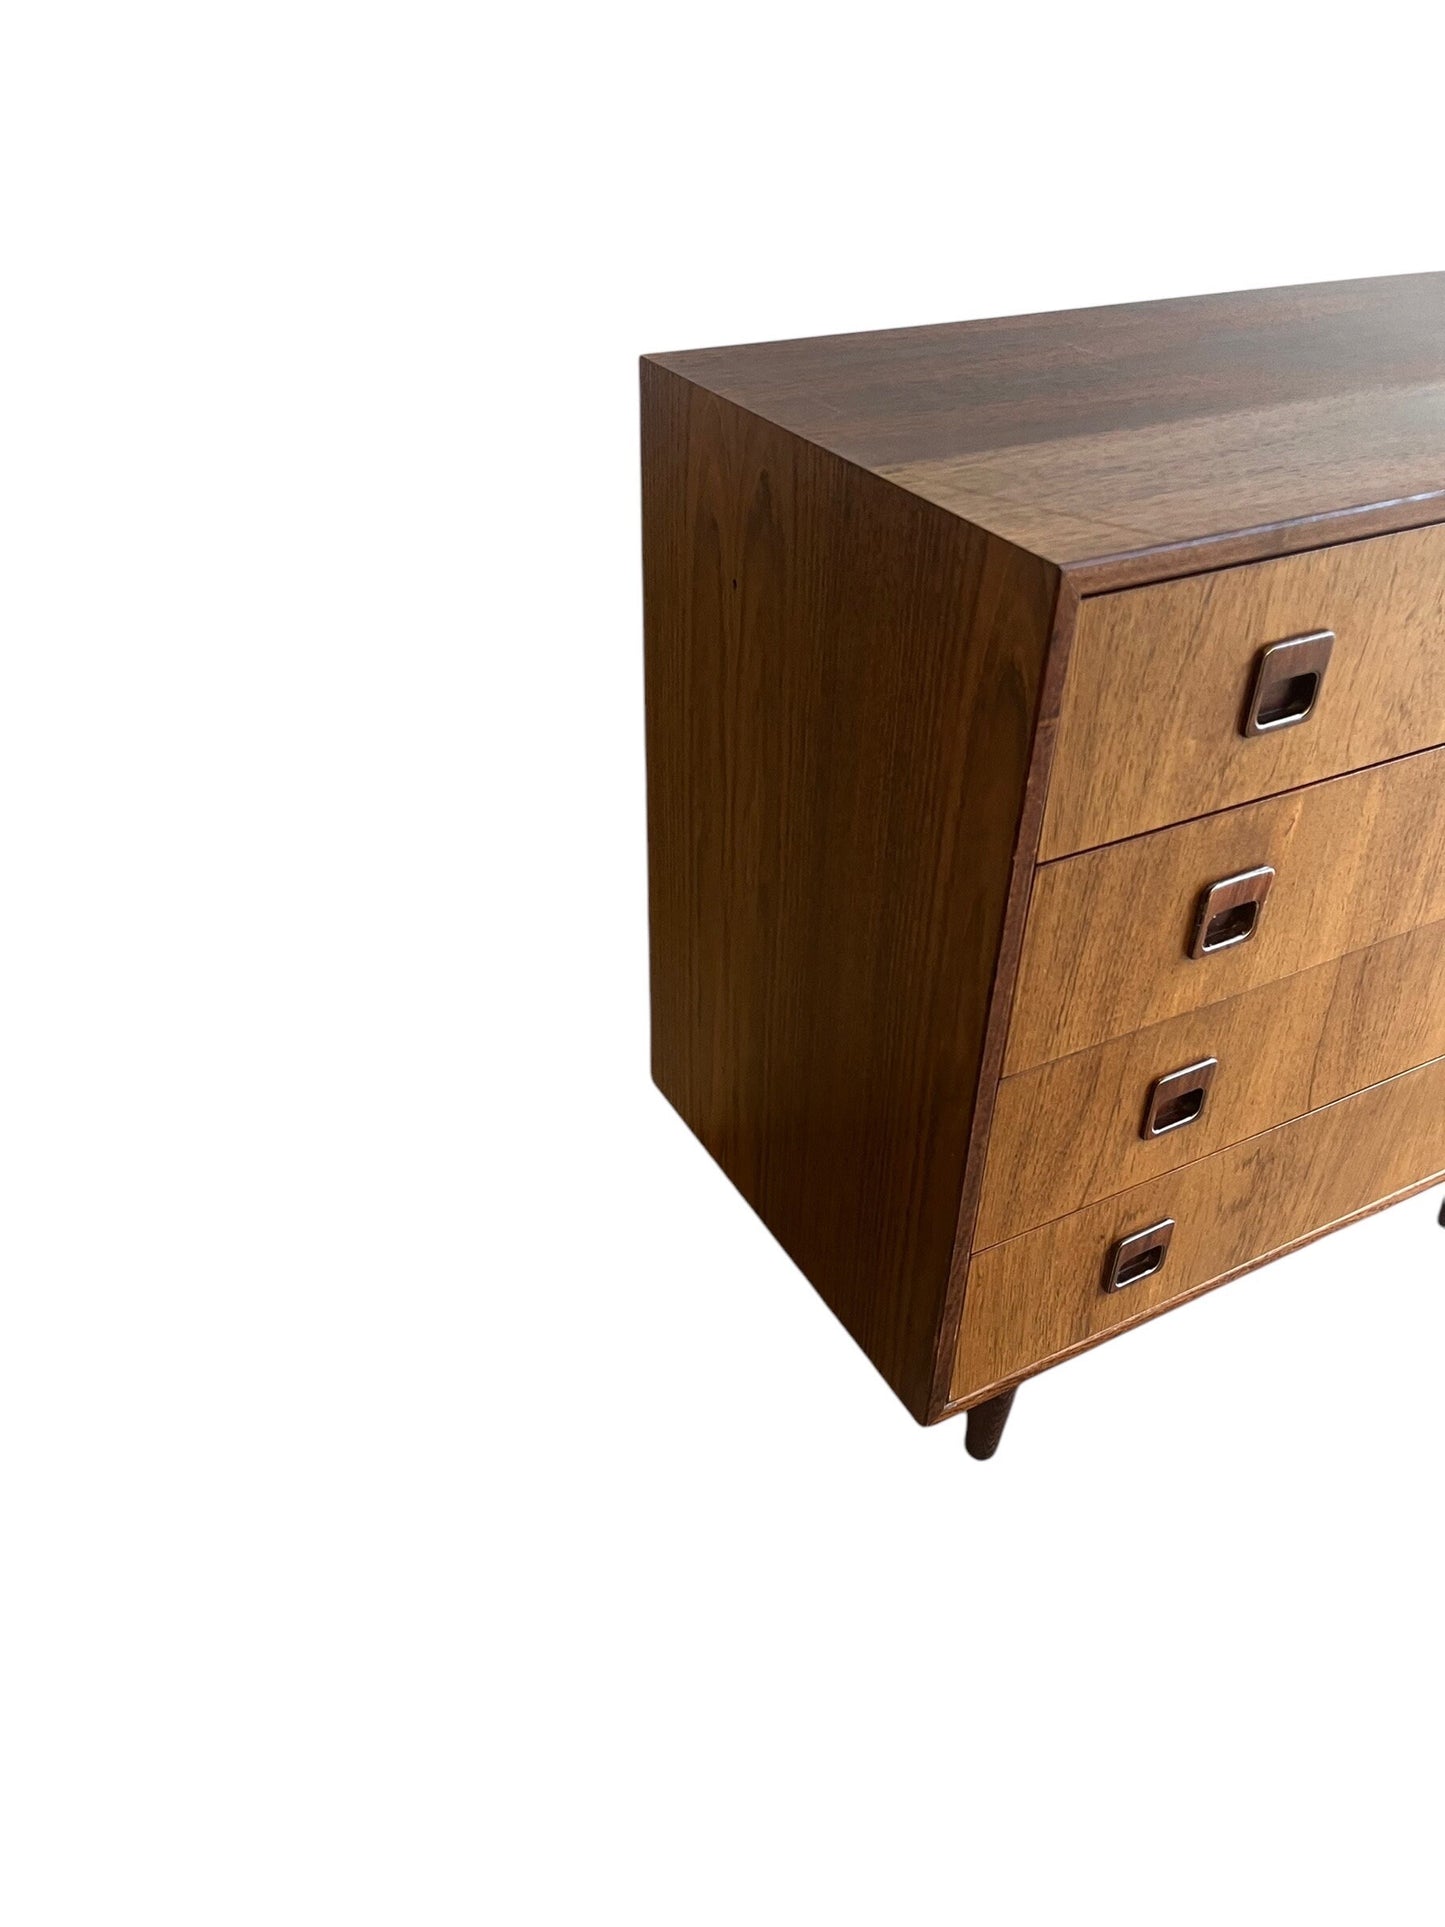 Mid-Century teak chest of drawers 1960's